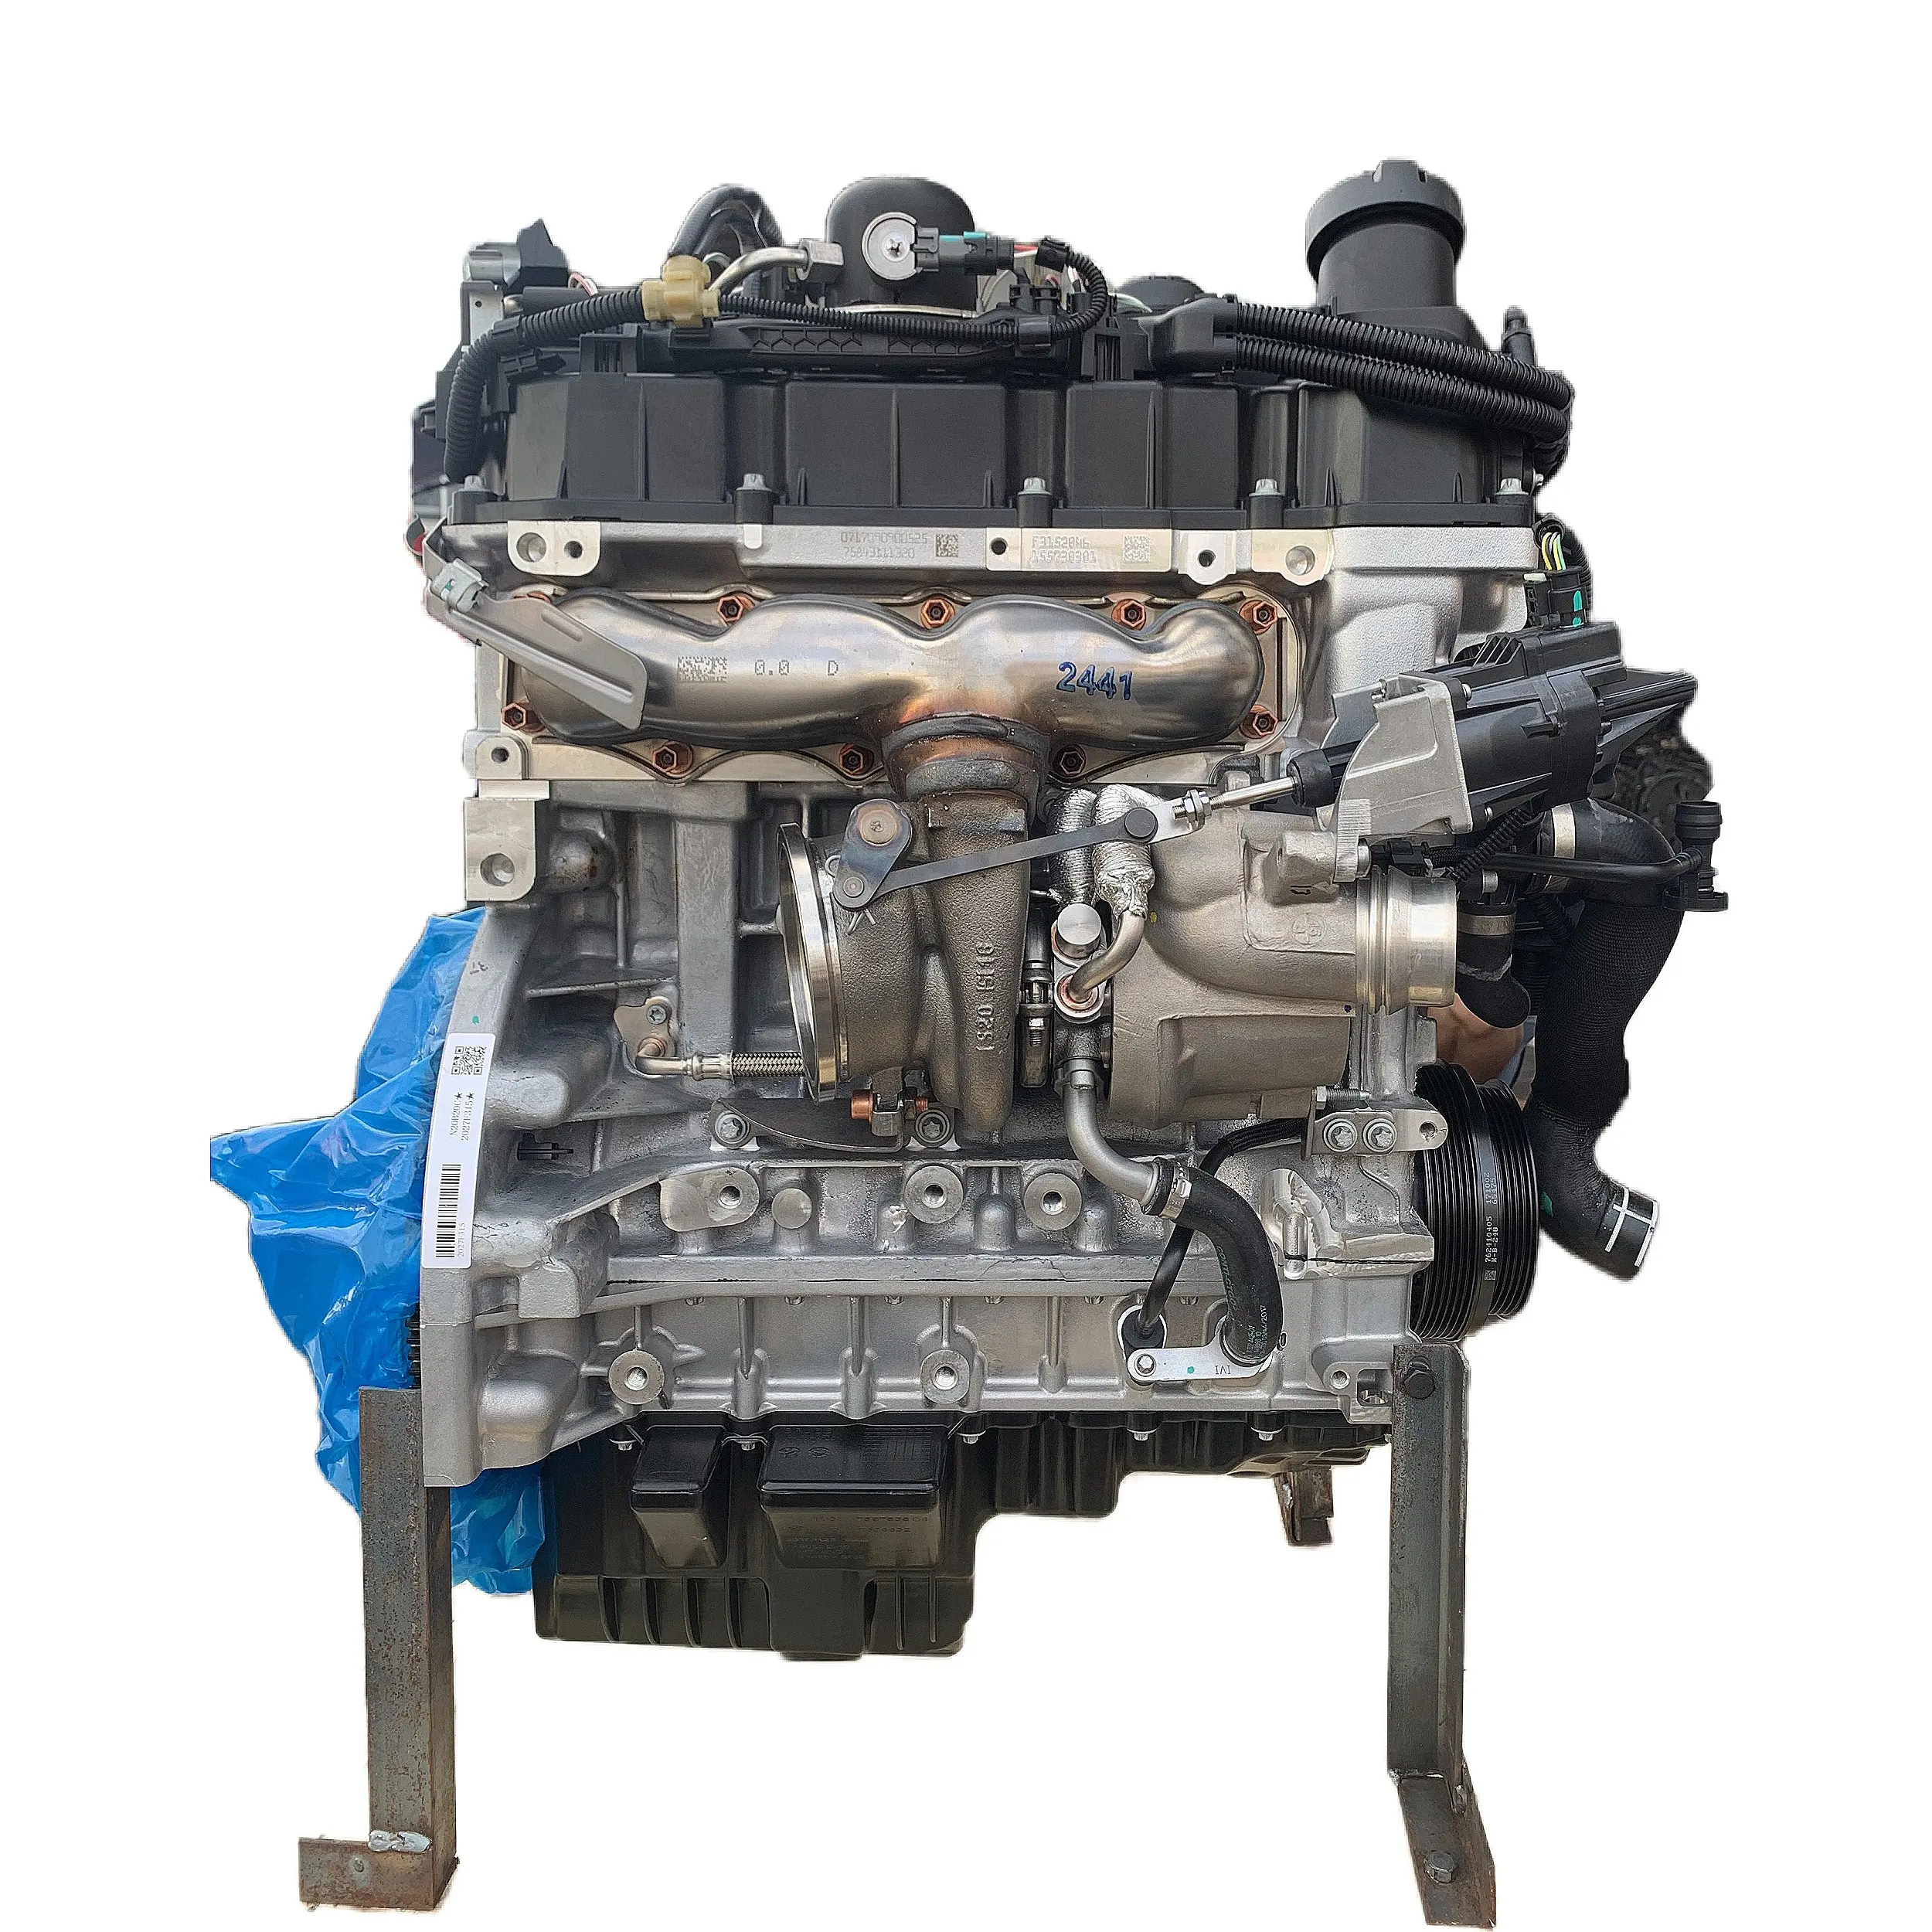 Sıcak satış motor tertibatı fabrika fiyat marka yeni benzin orijinal X1 X3 X5 F18 F10 F30 bmw n20 motor bmw için